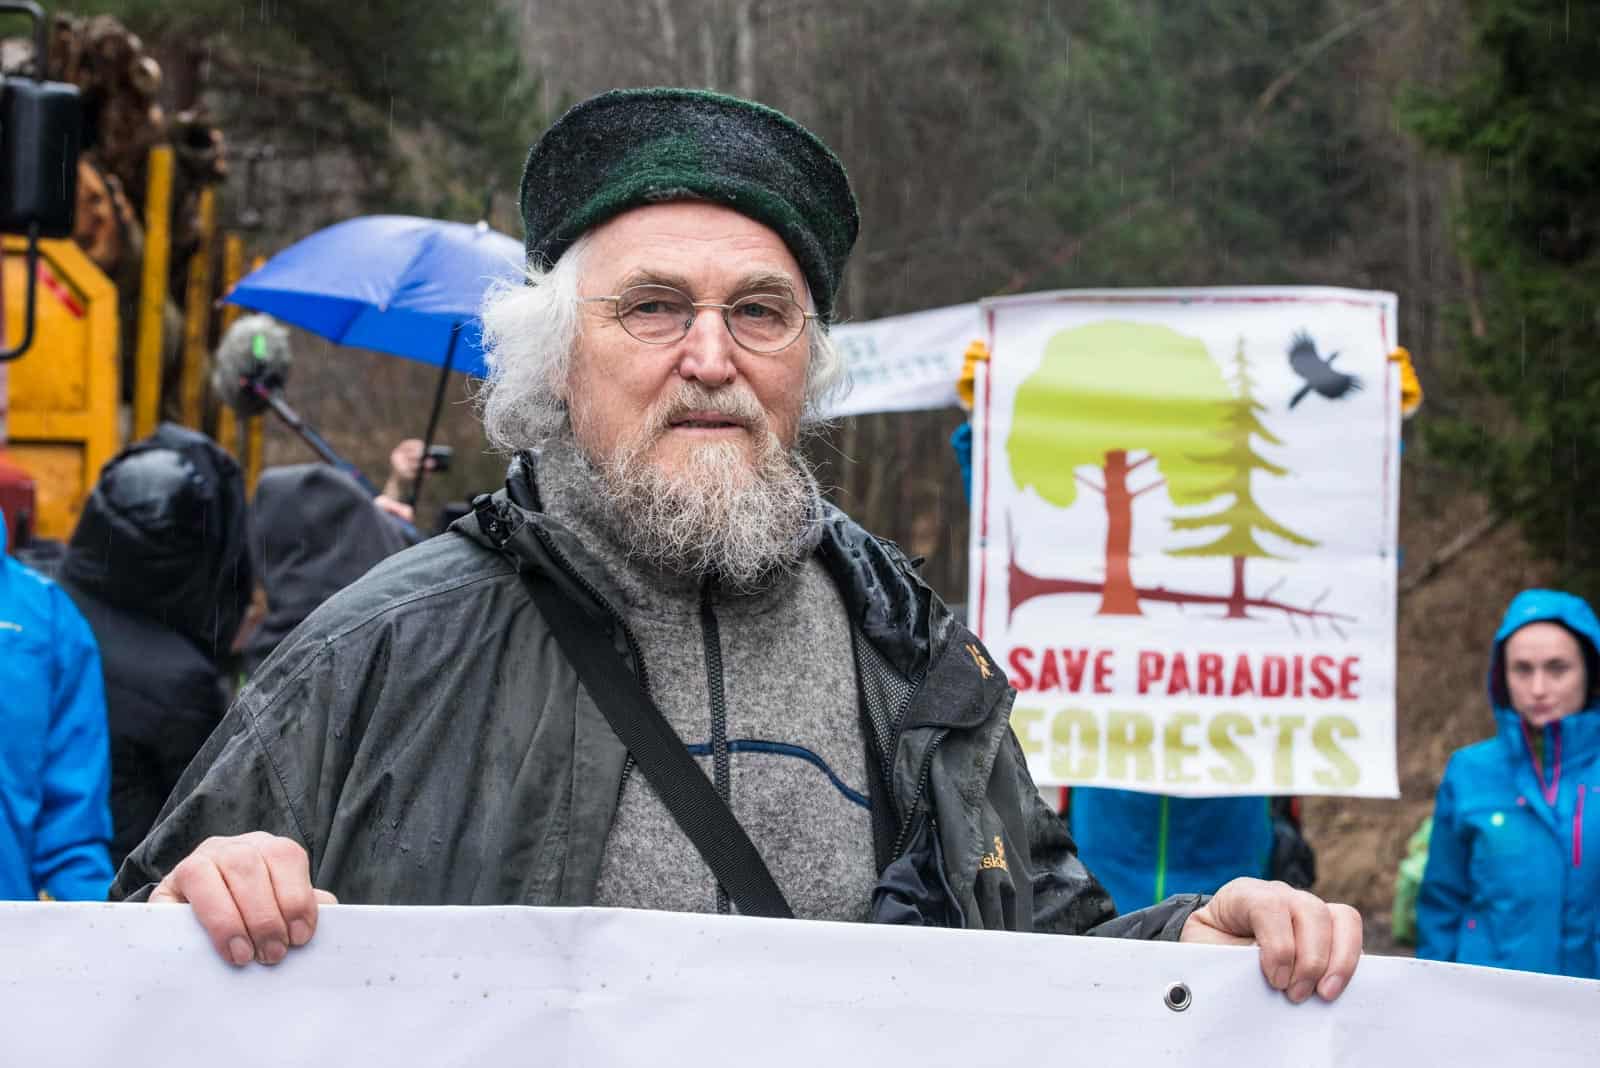 Hannes Knapp protests against illegal logging in Romania